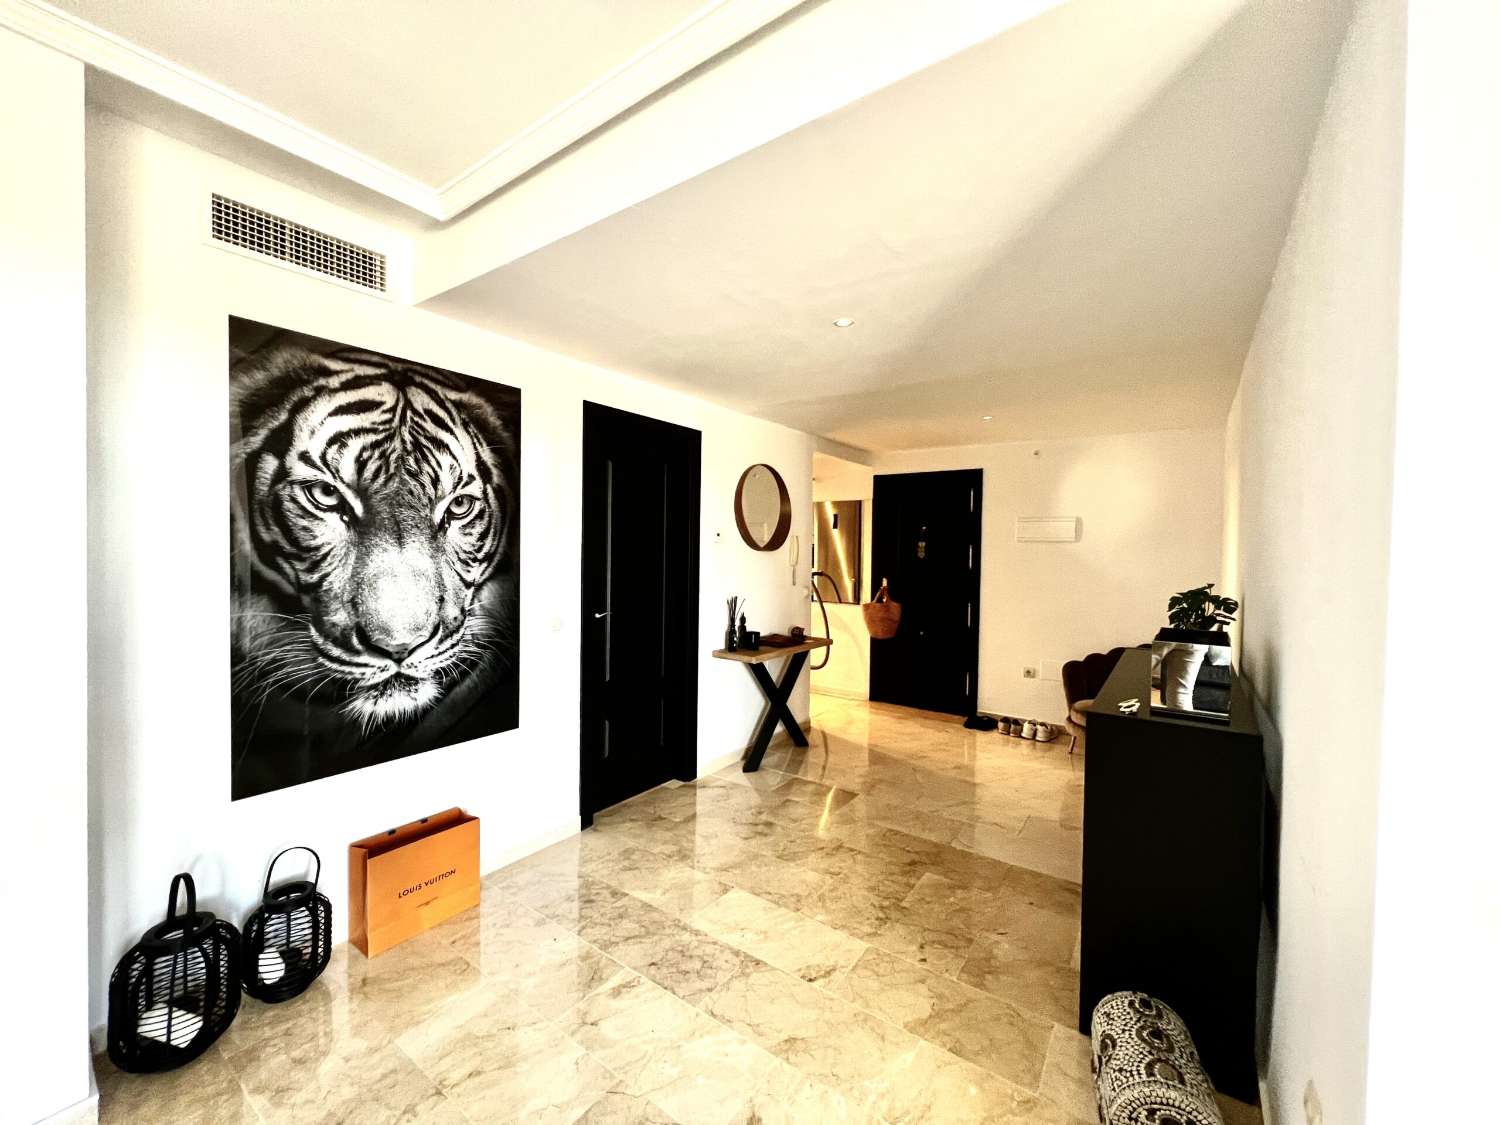 Prachtig gelegen appartement in Finca Doña Maria, Torrequebrada, Benalmádena, Malaga